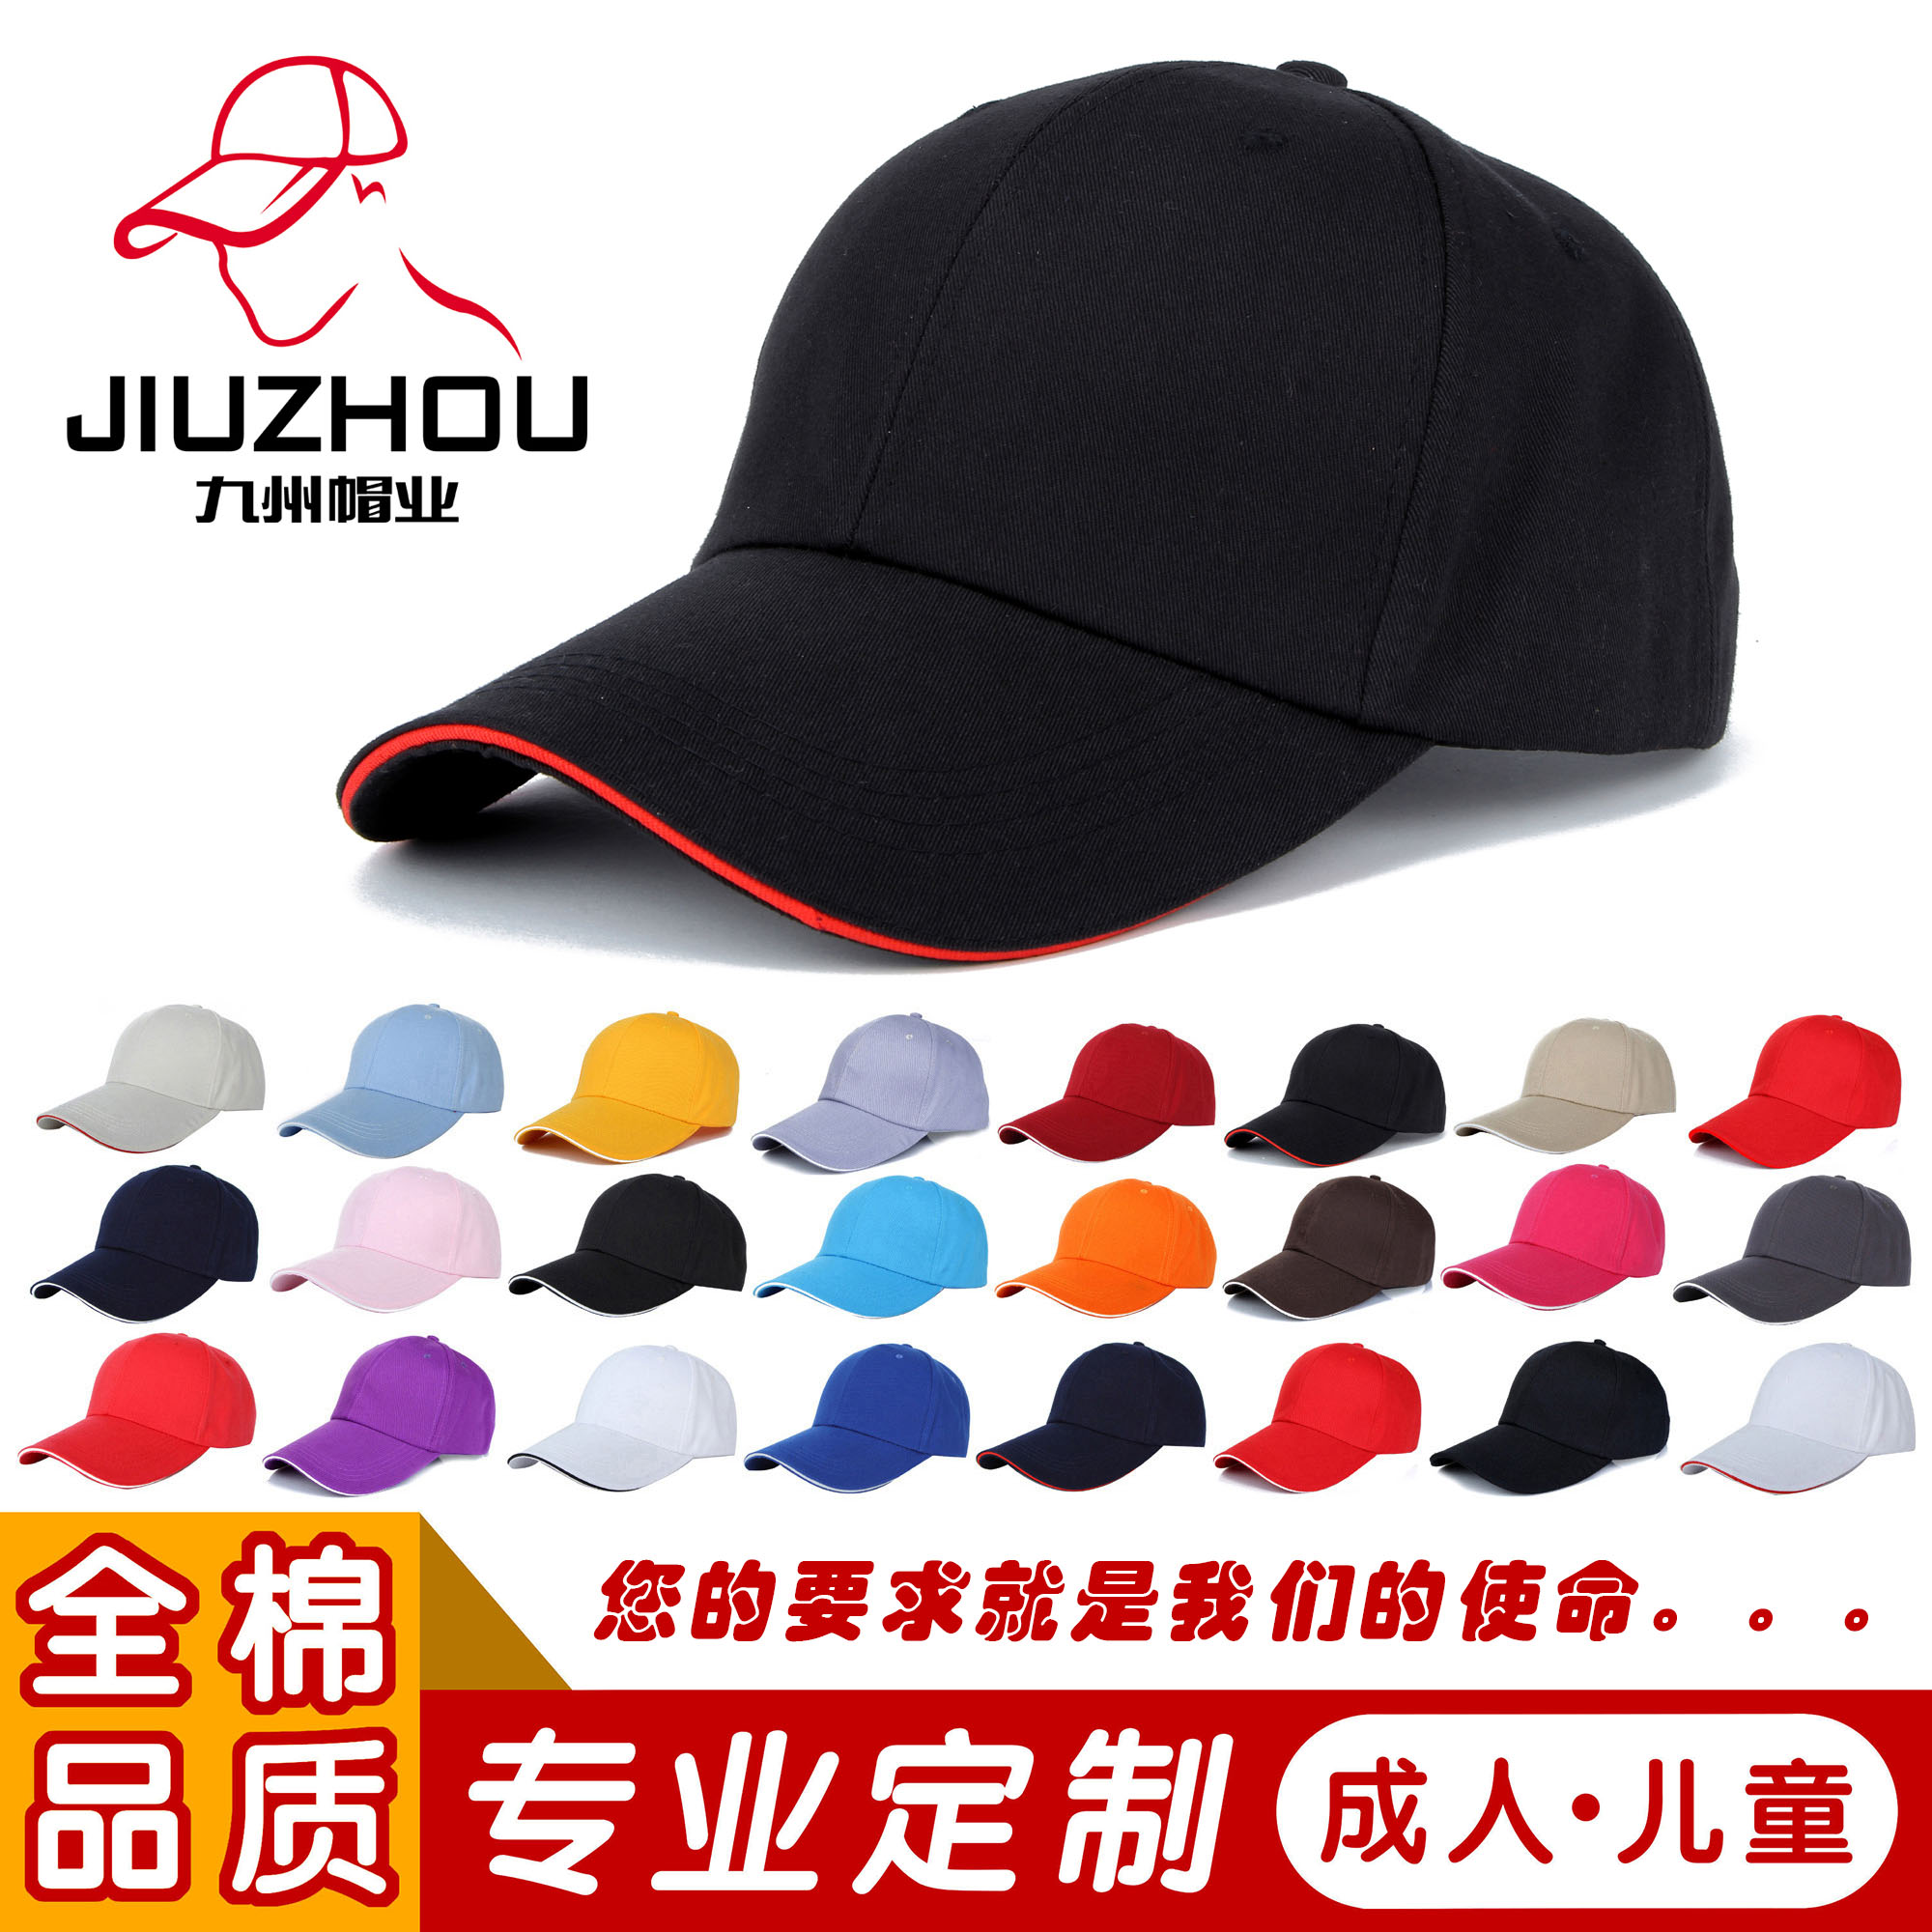 Baseball cap custom sun hat cap men's and women's children's advertising sun hat printing embroidery custom logo